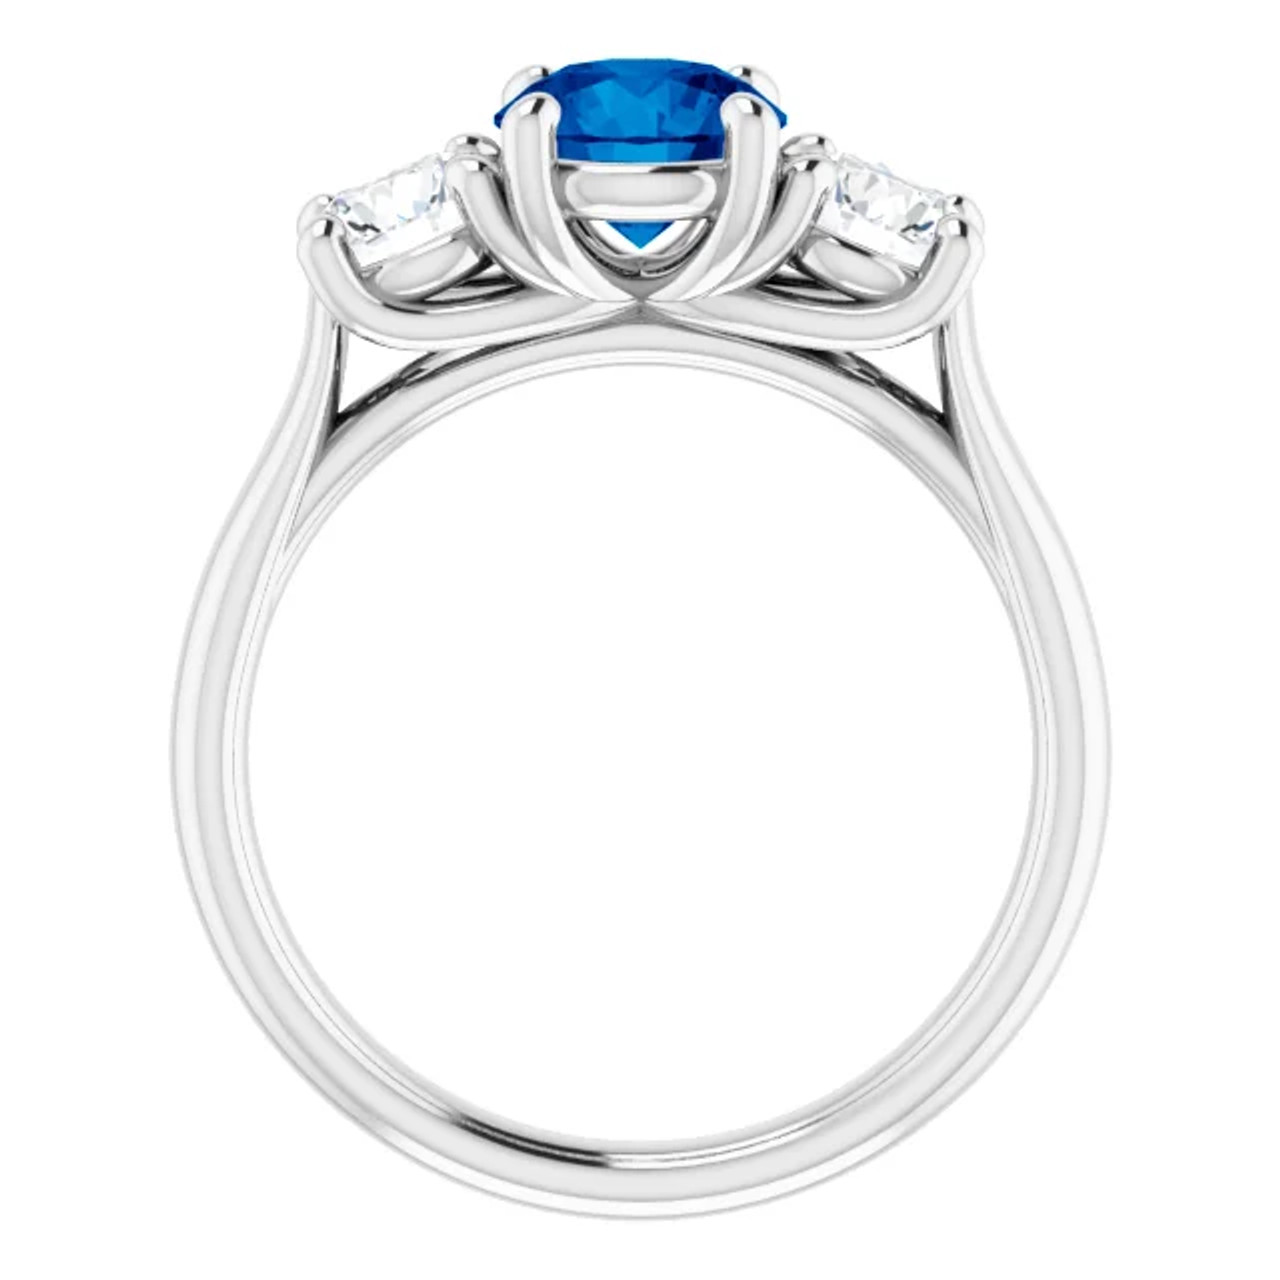 Burton's Men's Blue Sapphire Ring